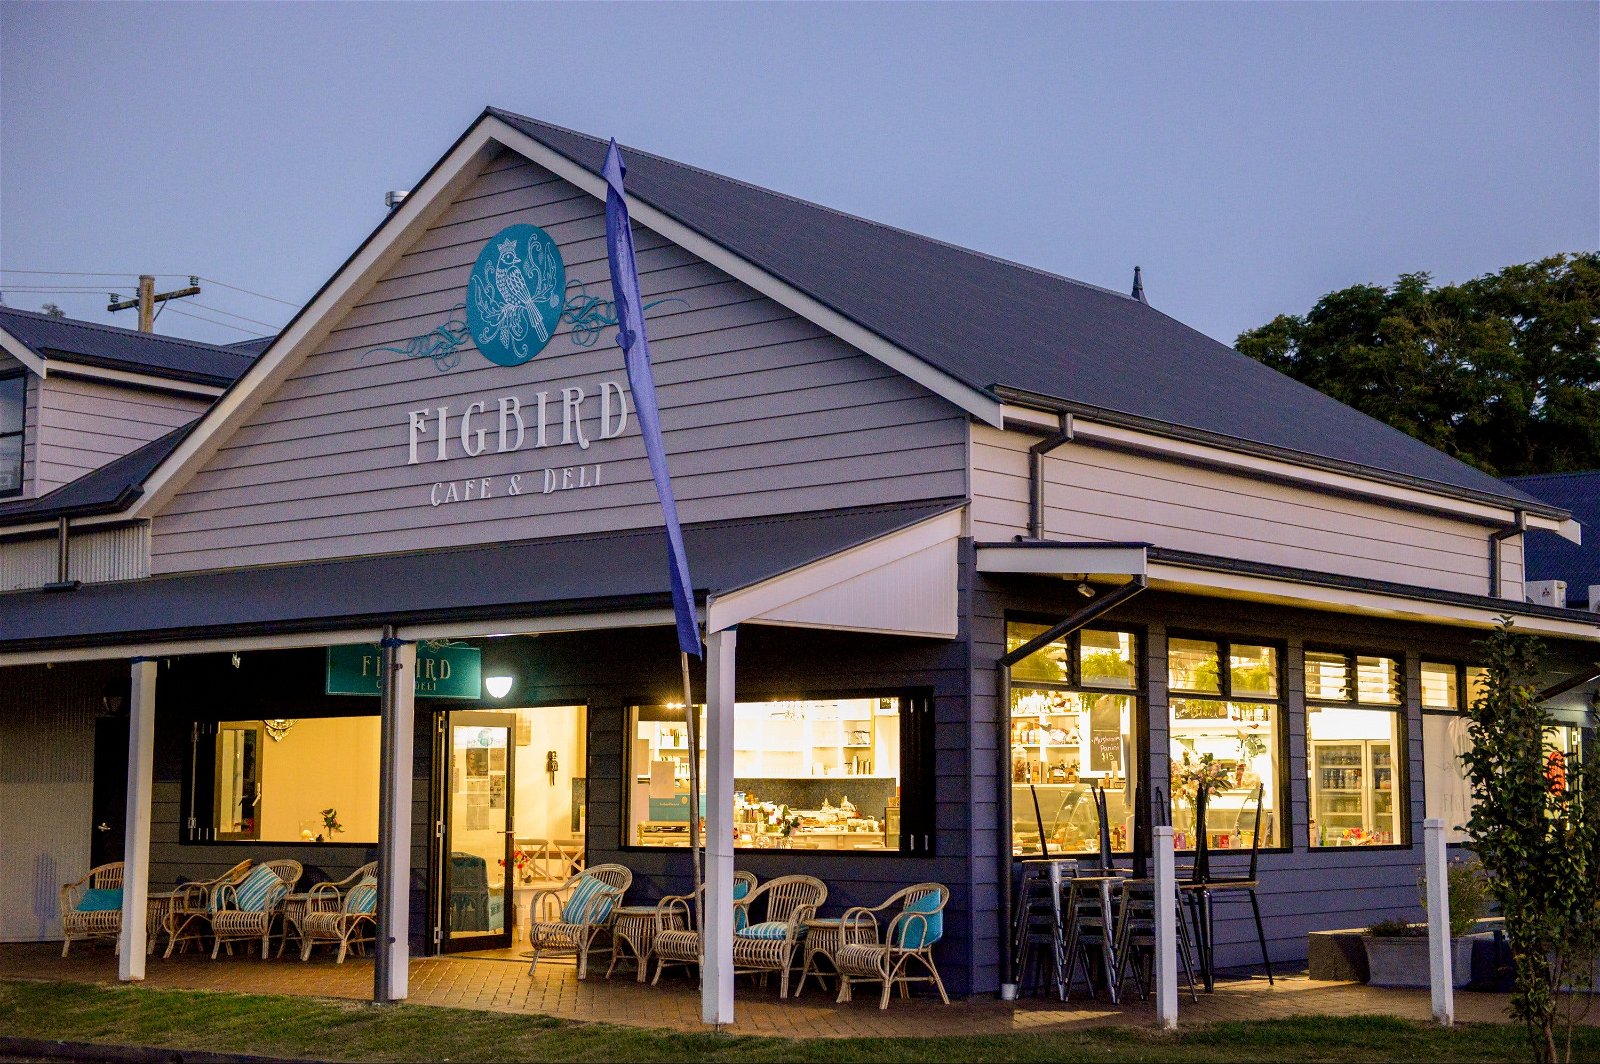 Figbird Cafe and Deli - Tourism Gold Coast